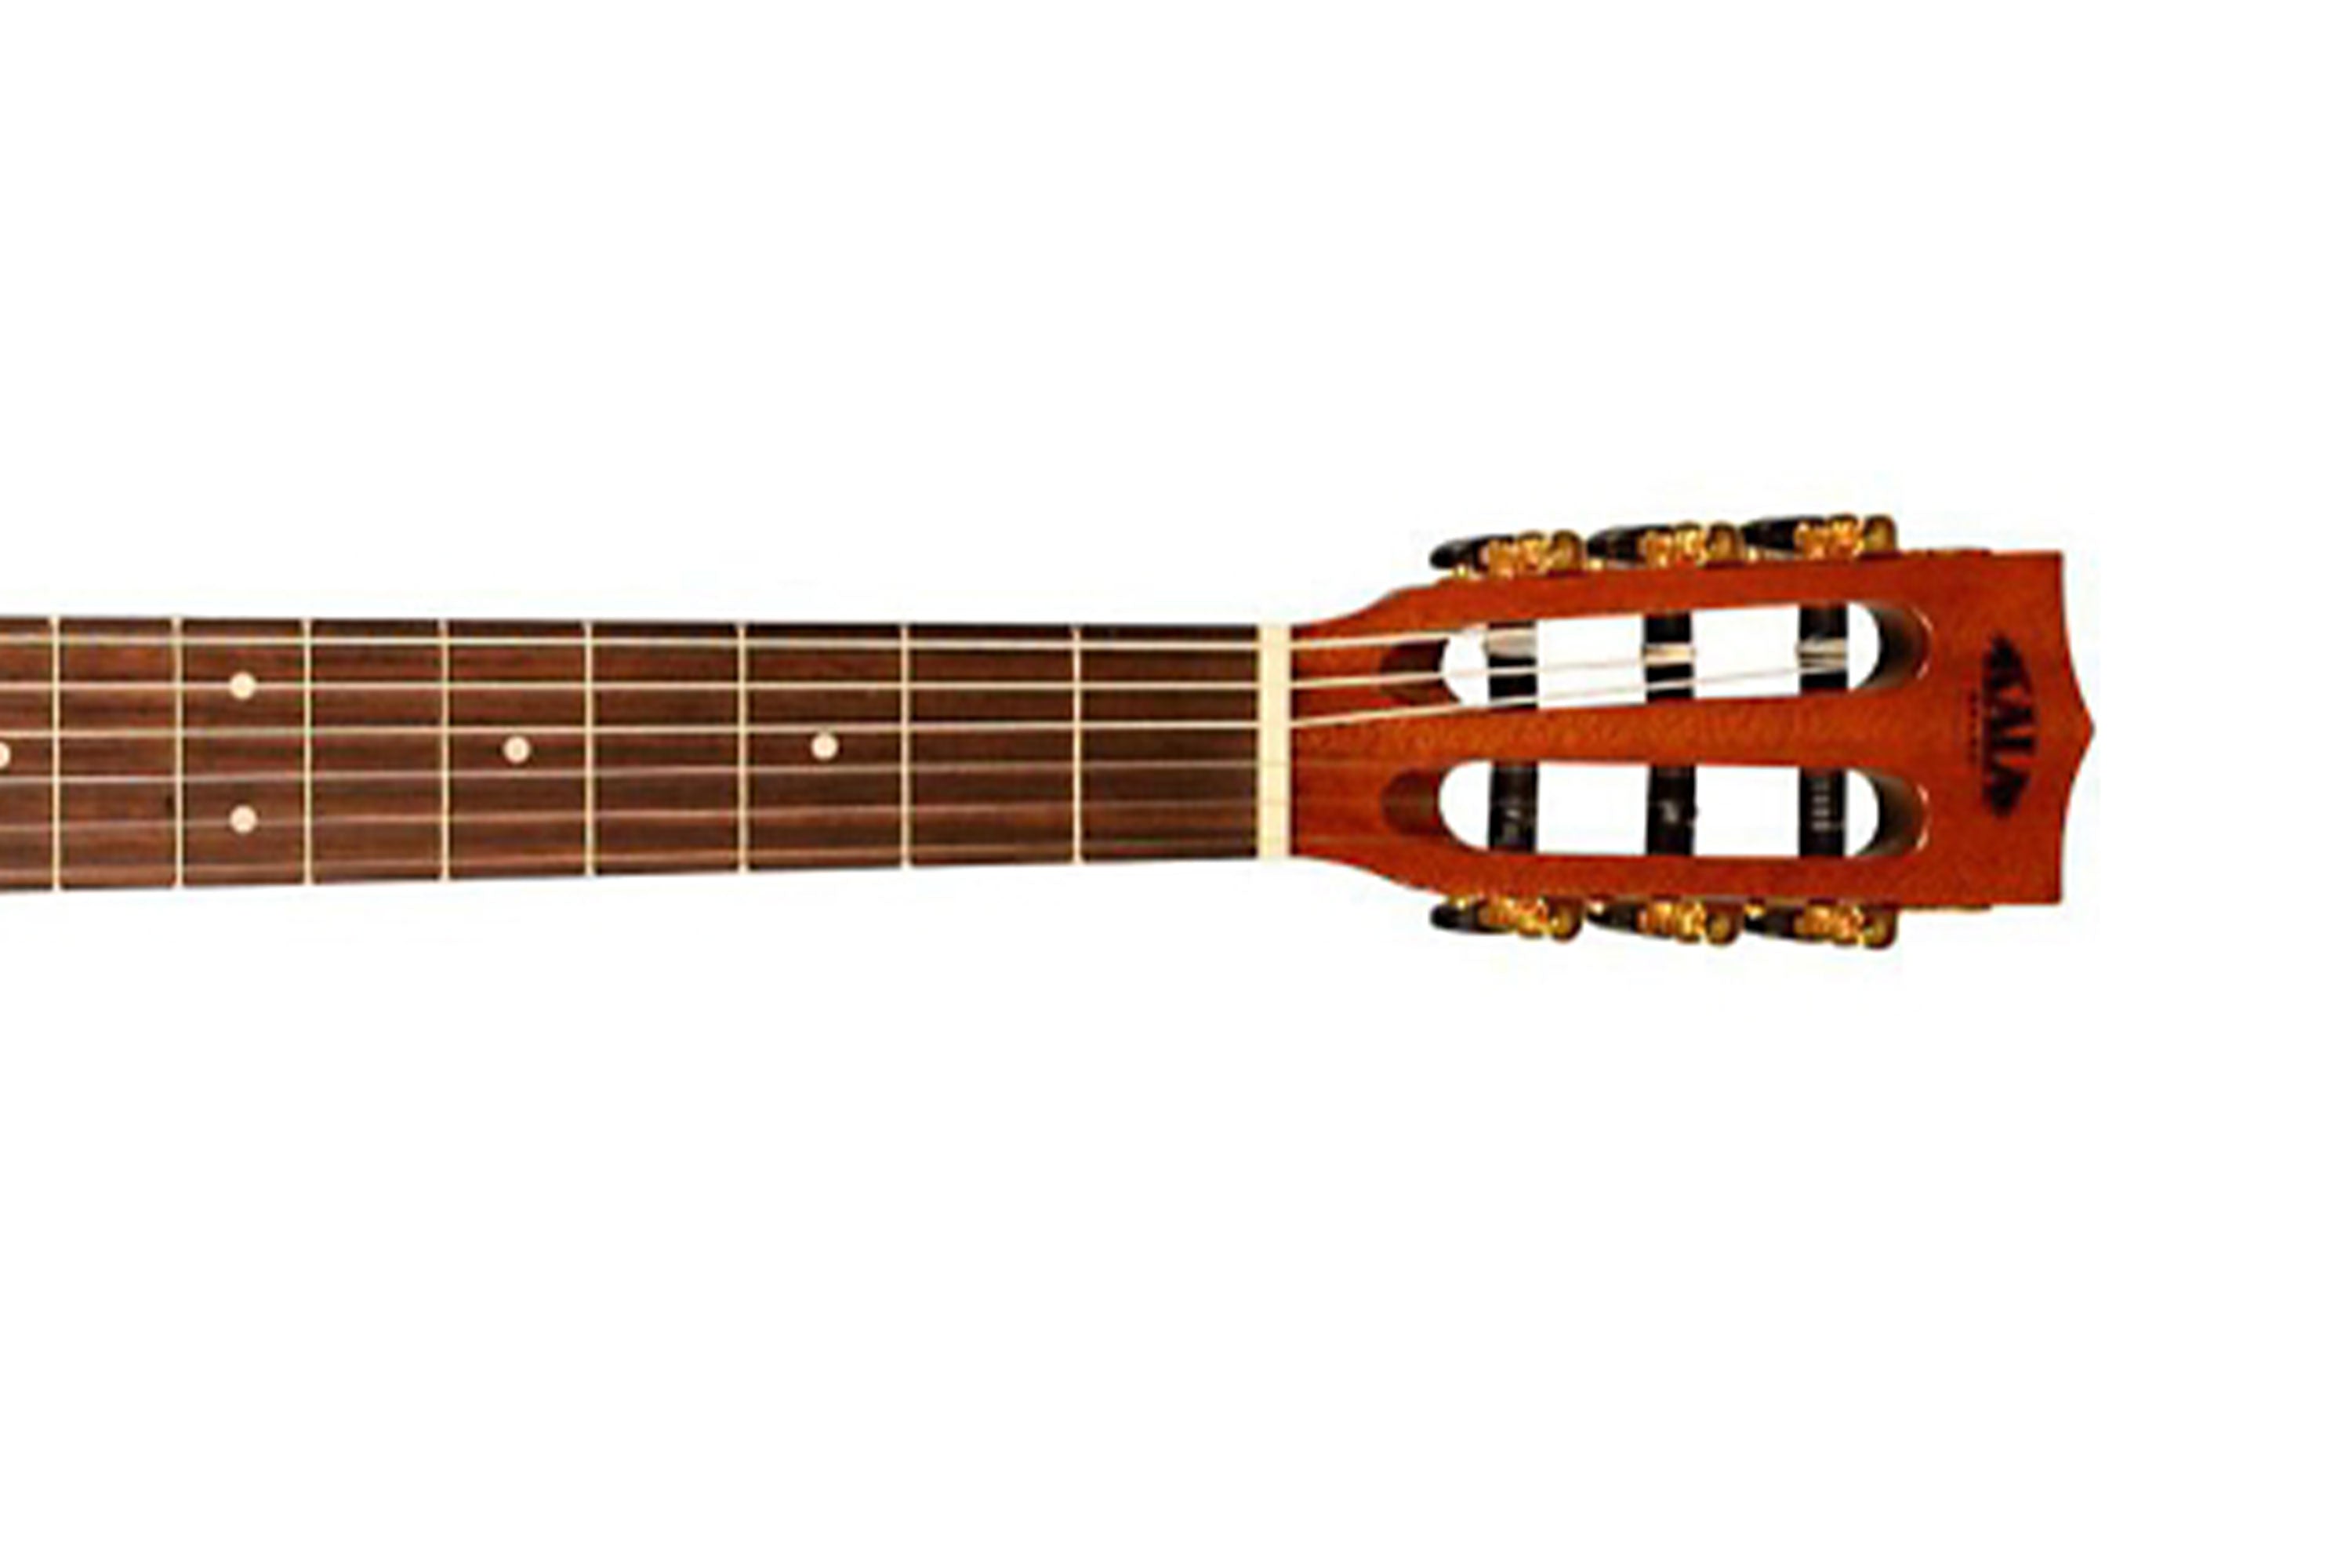 Kala Solid Mahogany Thinline Nylon Guitar